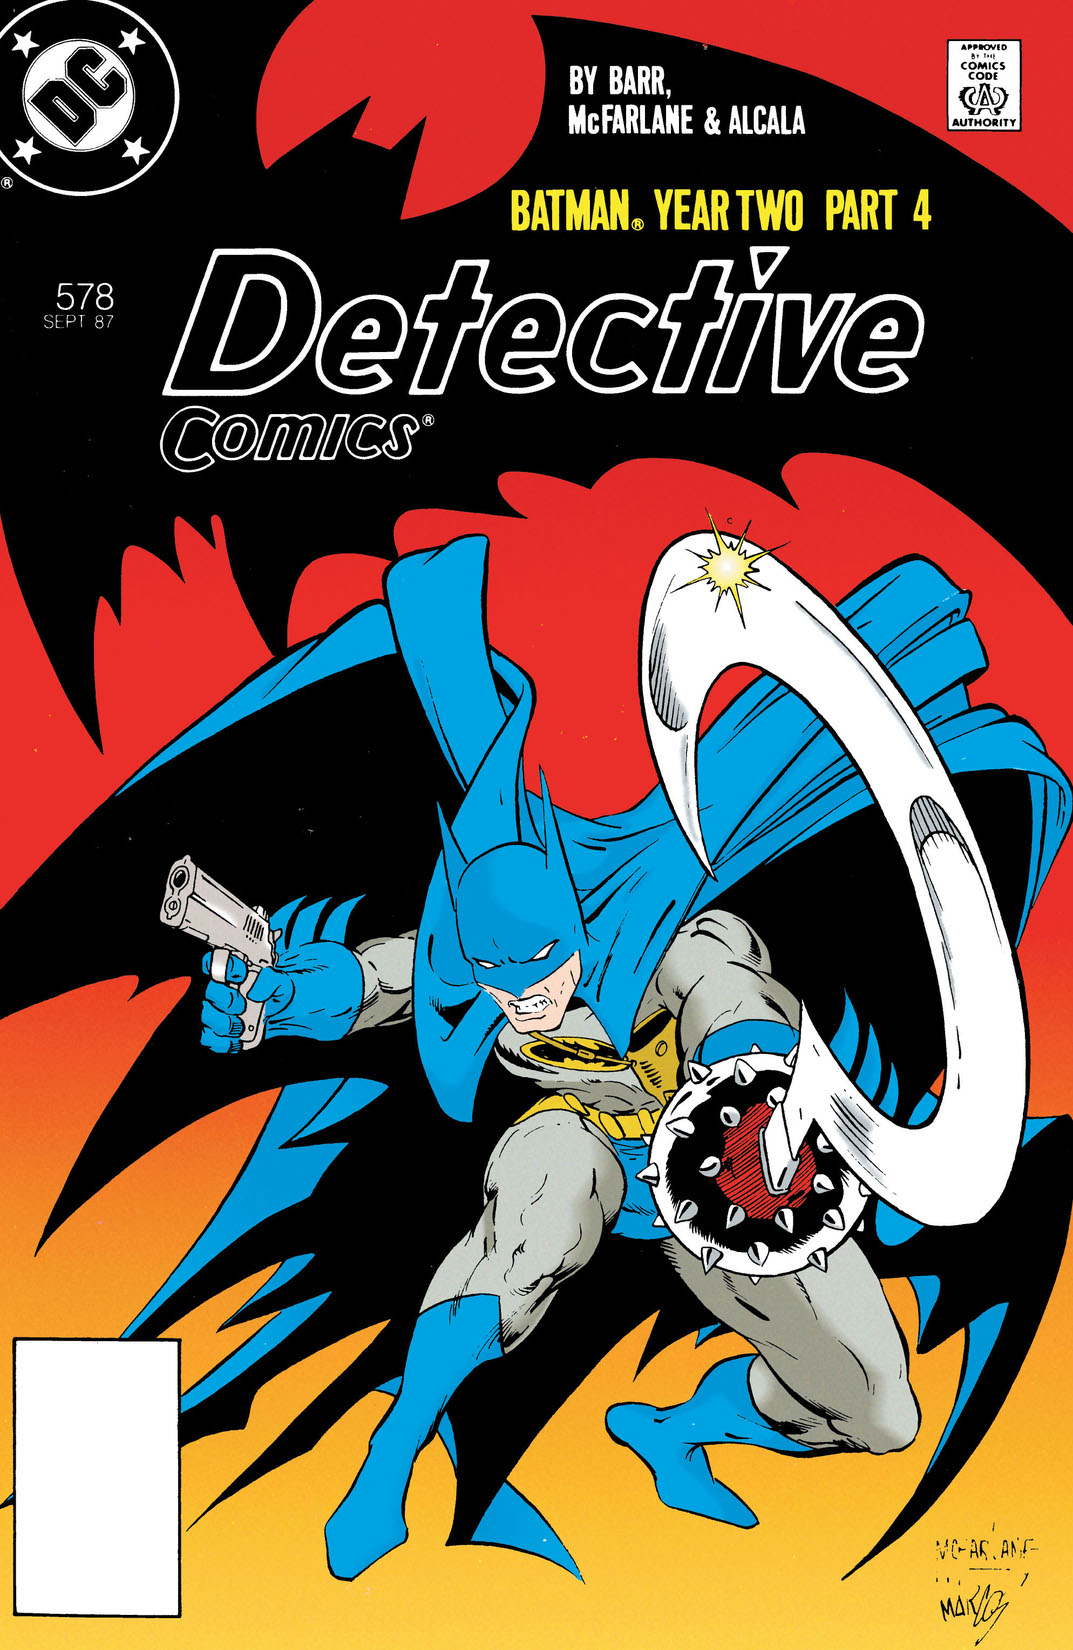 Detective Comics (1937-) #578 preview images